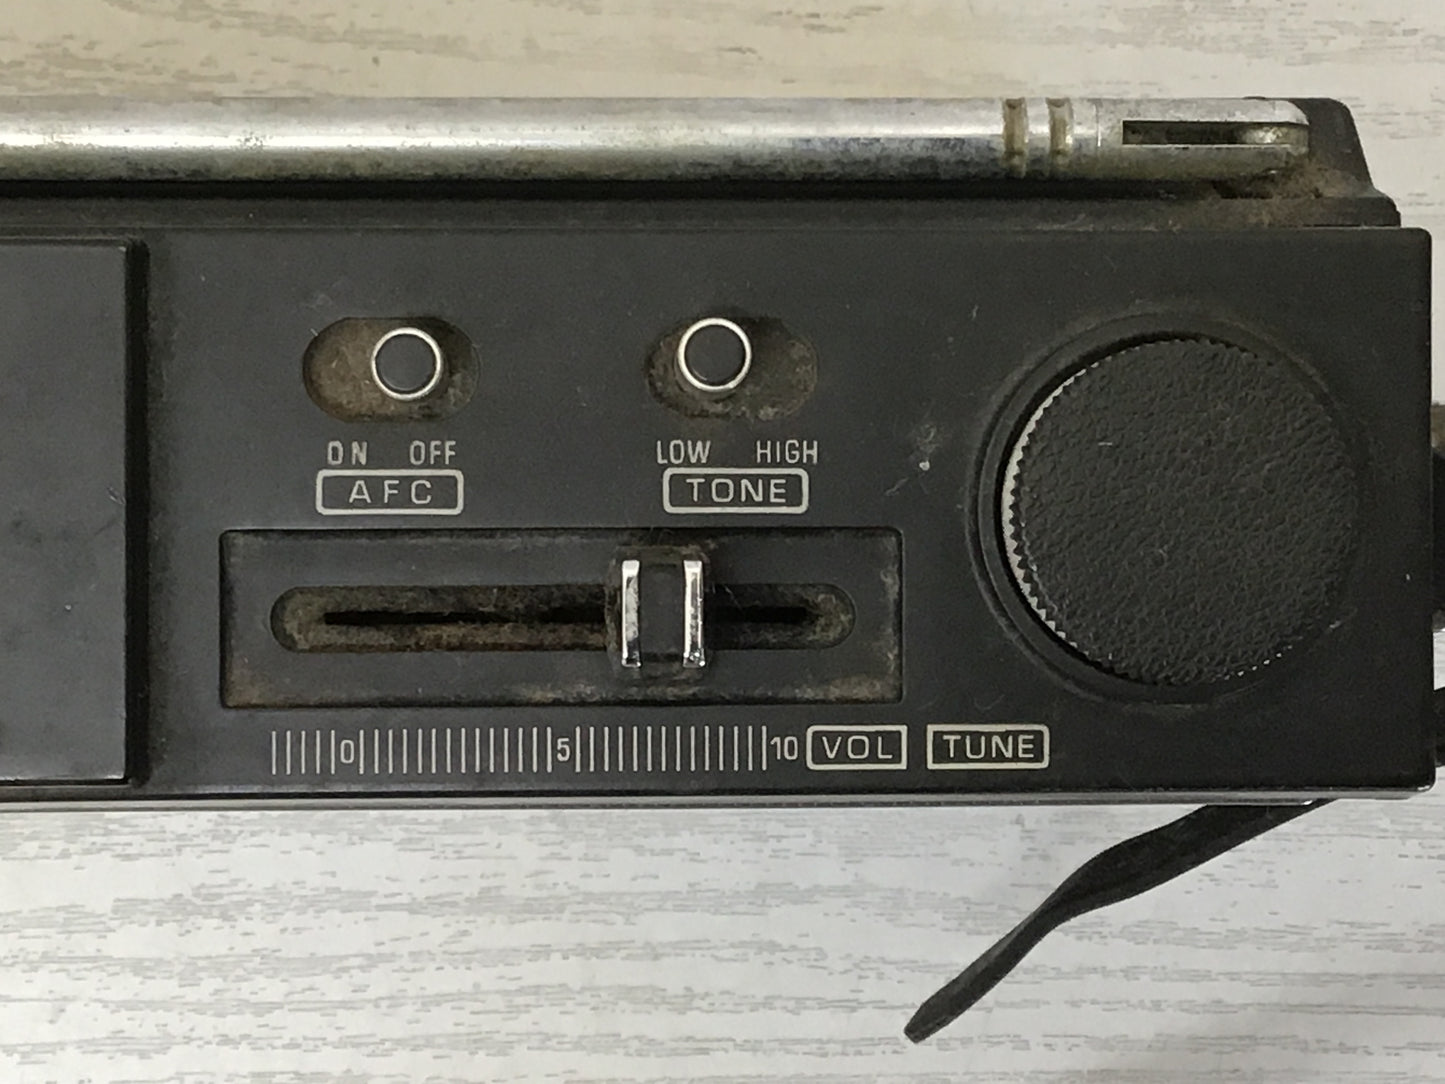 Y2336 RADIO SANYO 10F-B36 transistor portable Japan antique vintage music news